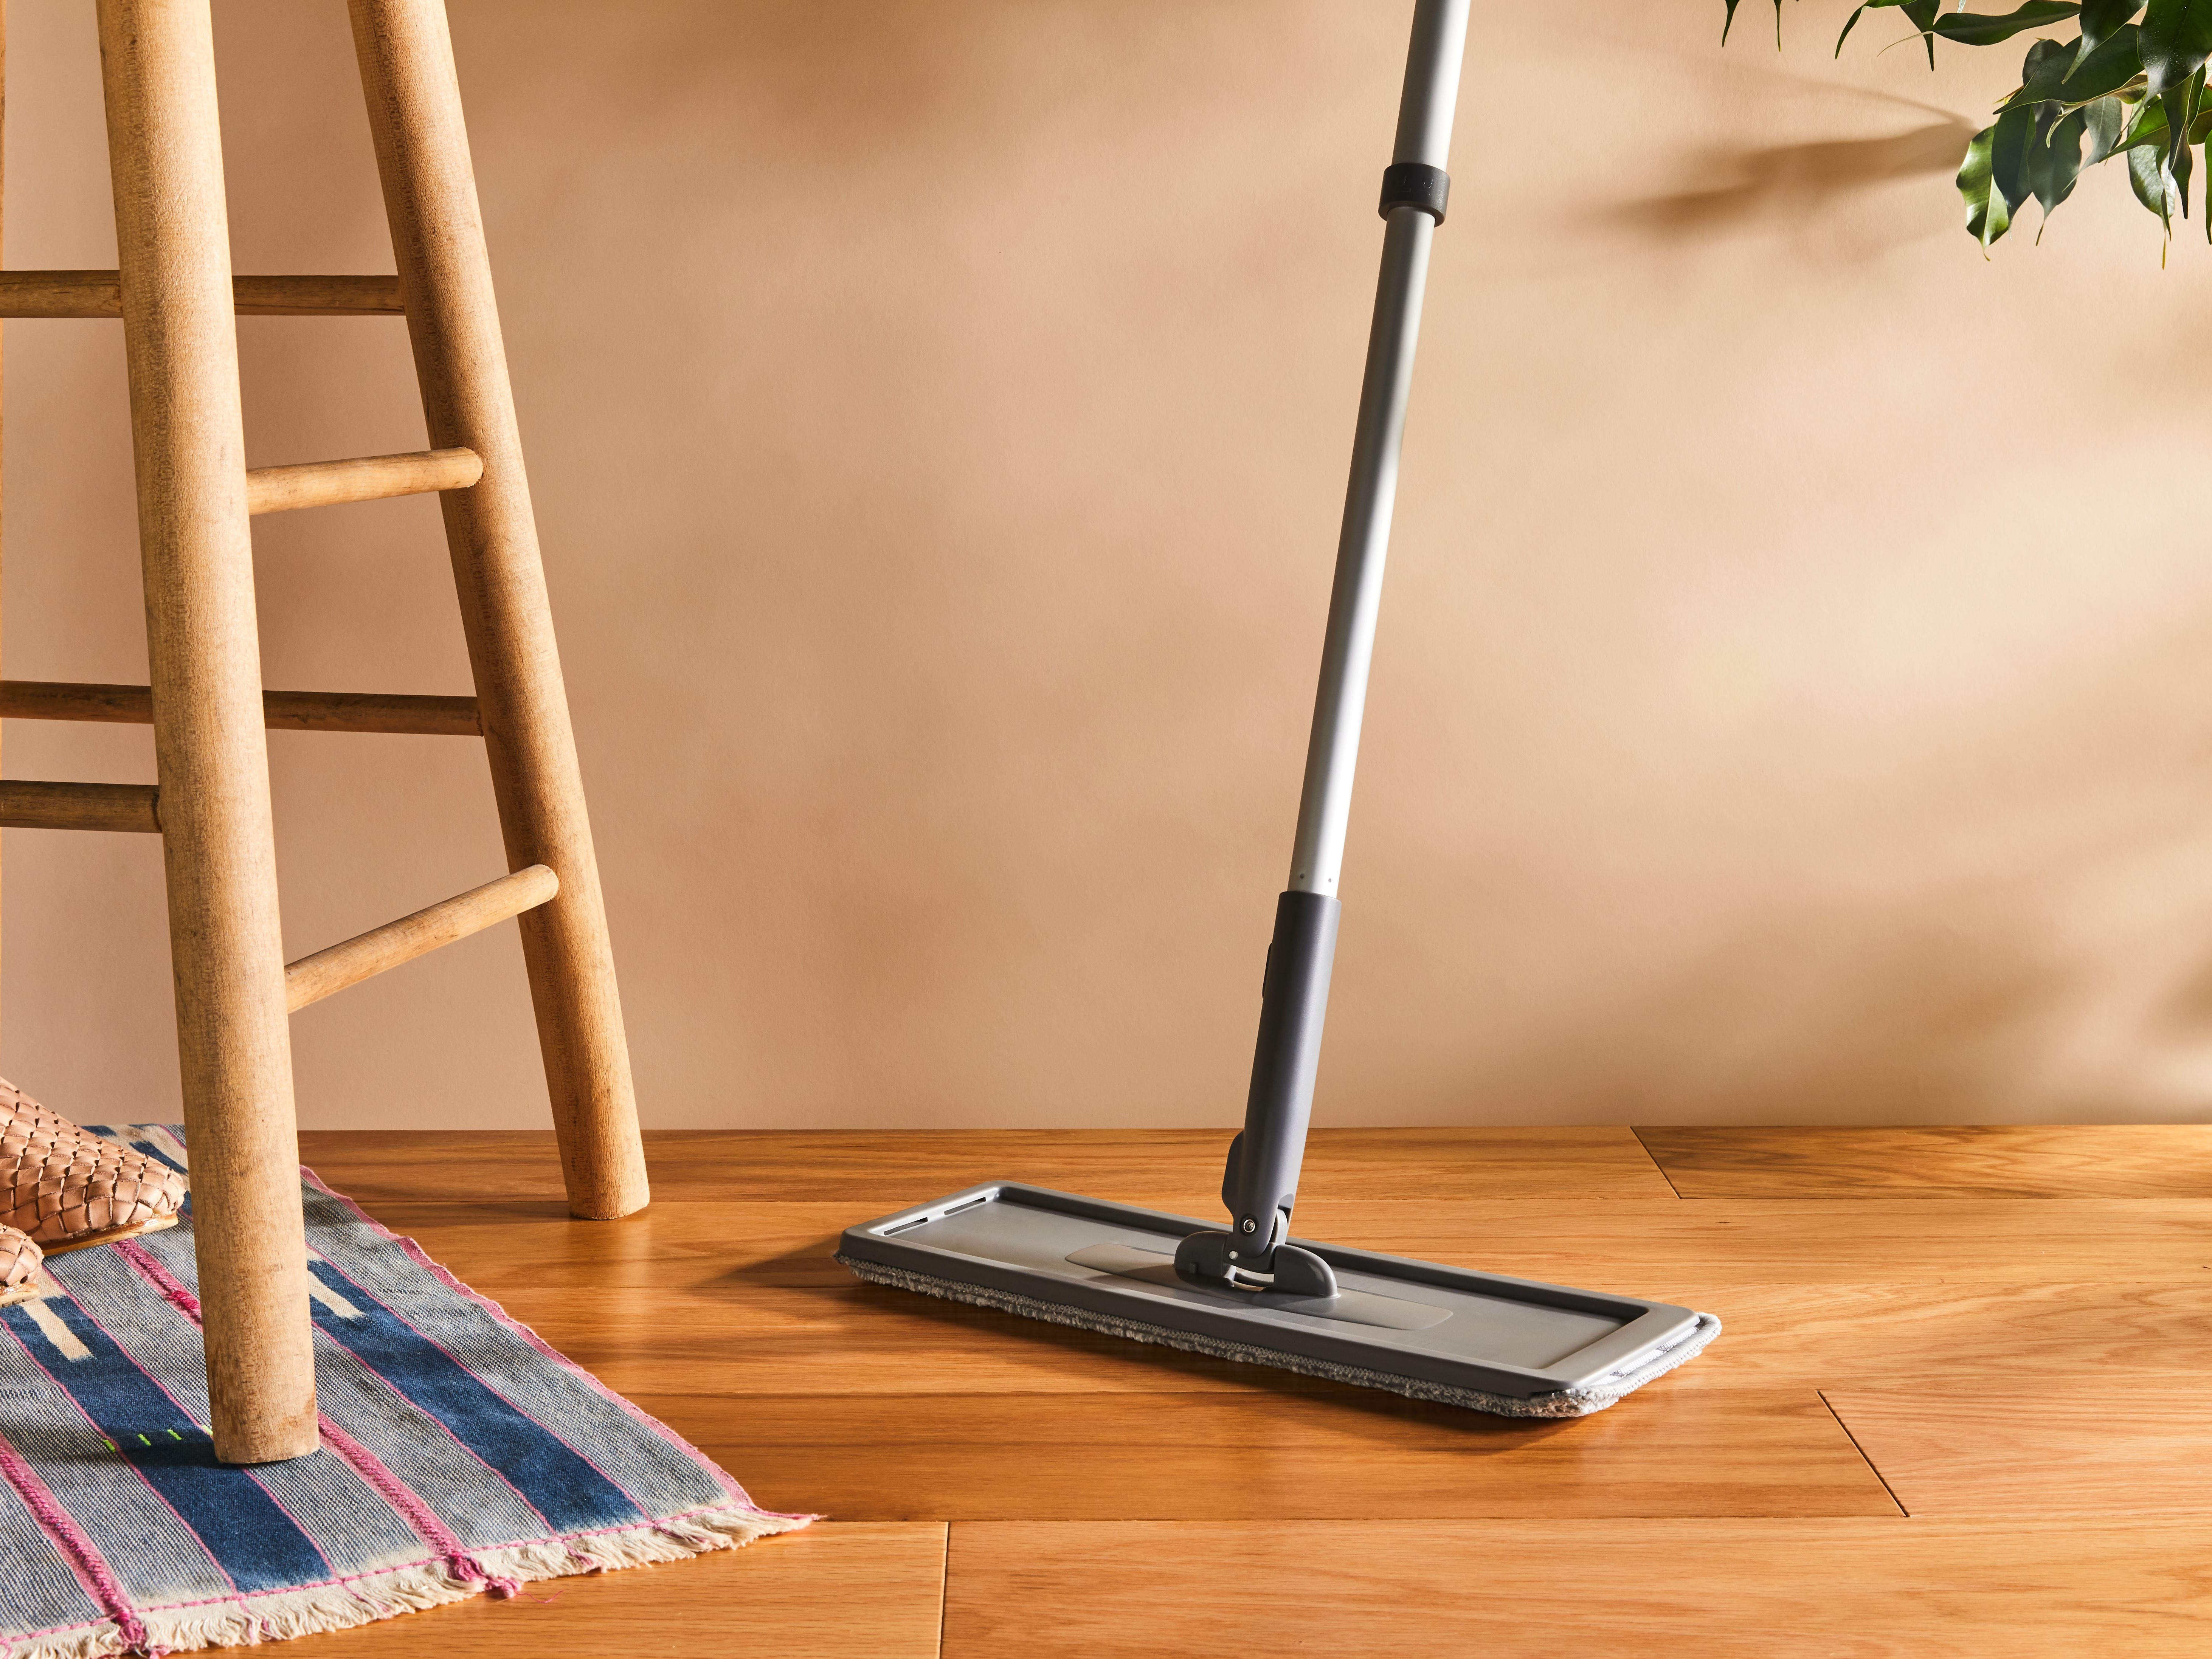 Grove compact mop and broom on wood floor